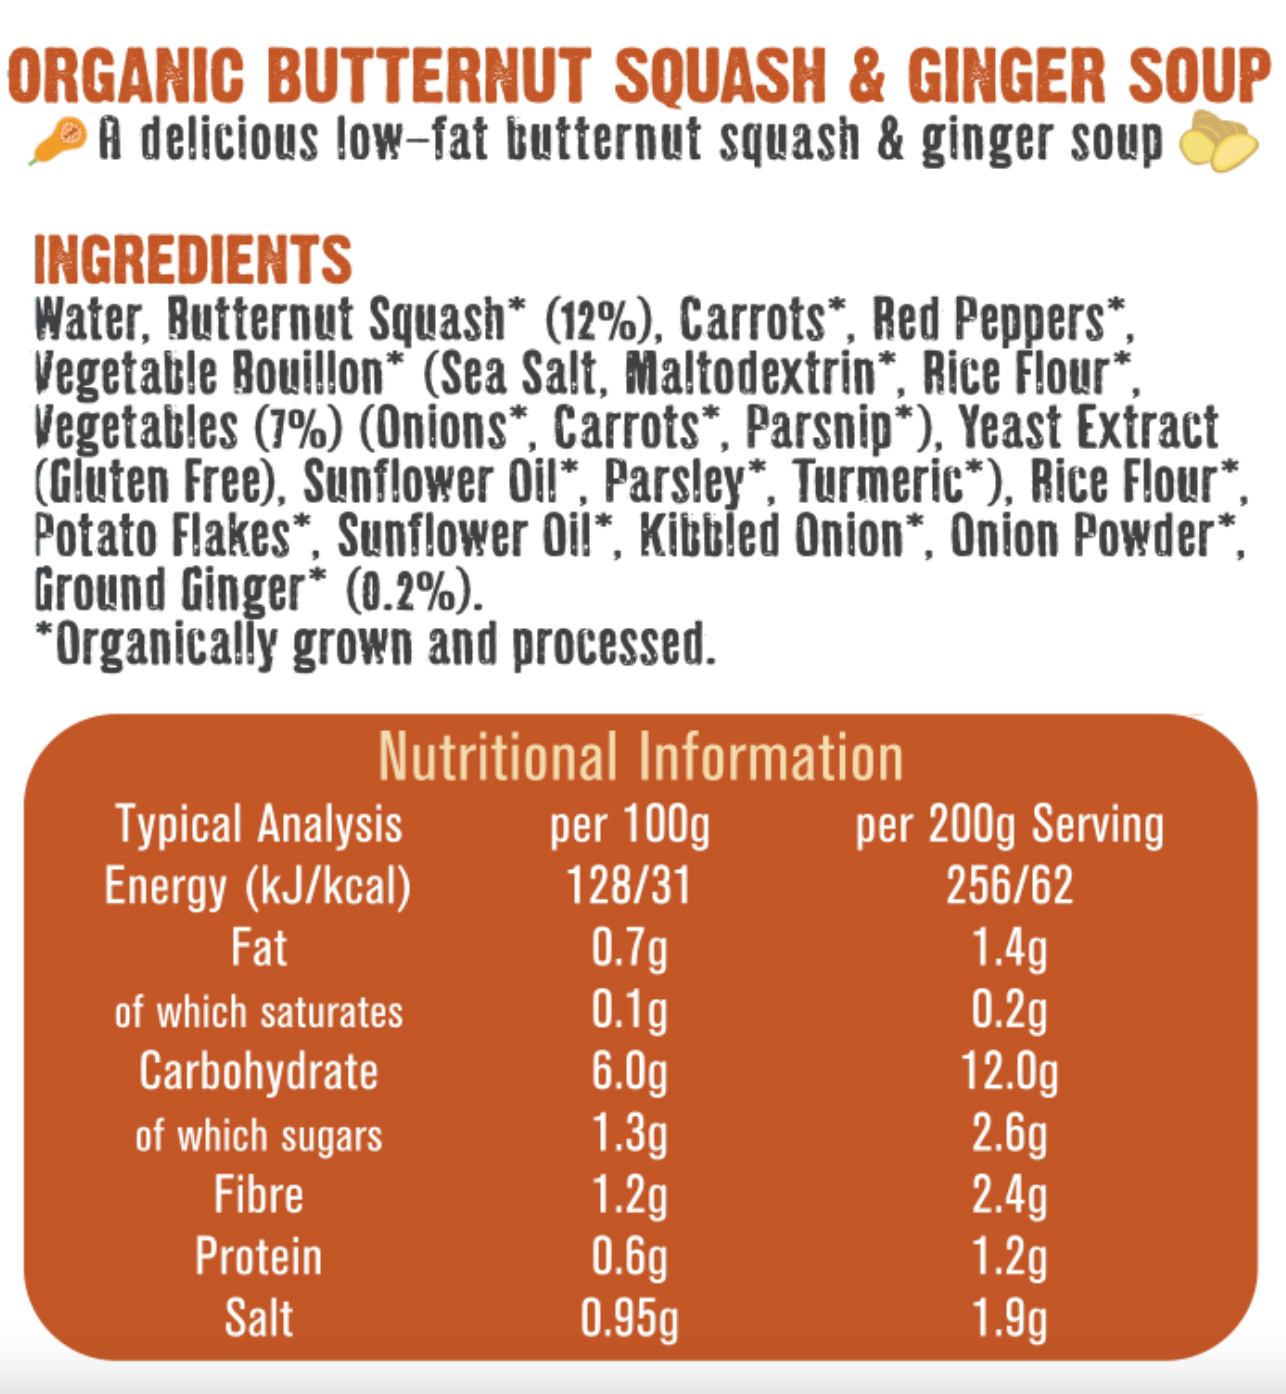 Free & Easy - Organic Butternut Squash & Ginger soup - GF - 400g